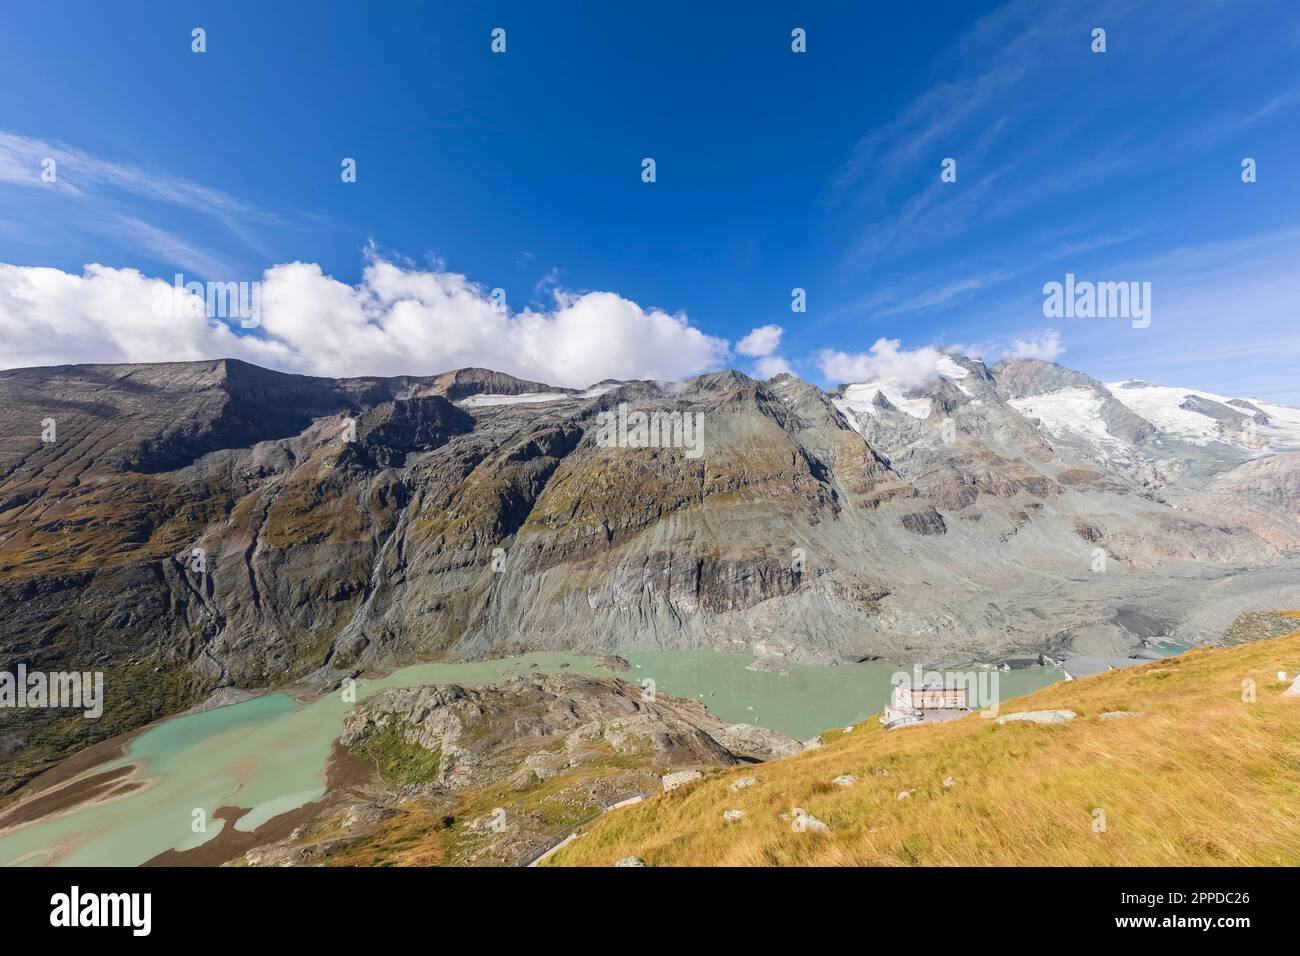 Austria, Salzburger Land, vista panoramica da Kaiser-Franz-Josefs-Hohe alla cima Grossglockner, ghiacciaio Pasterze e Sandersee Foto Stock